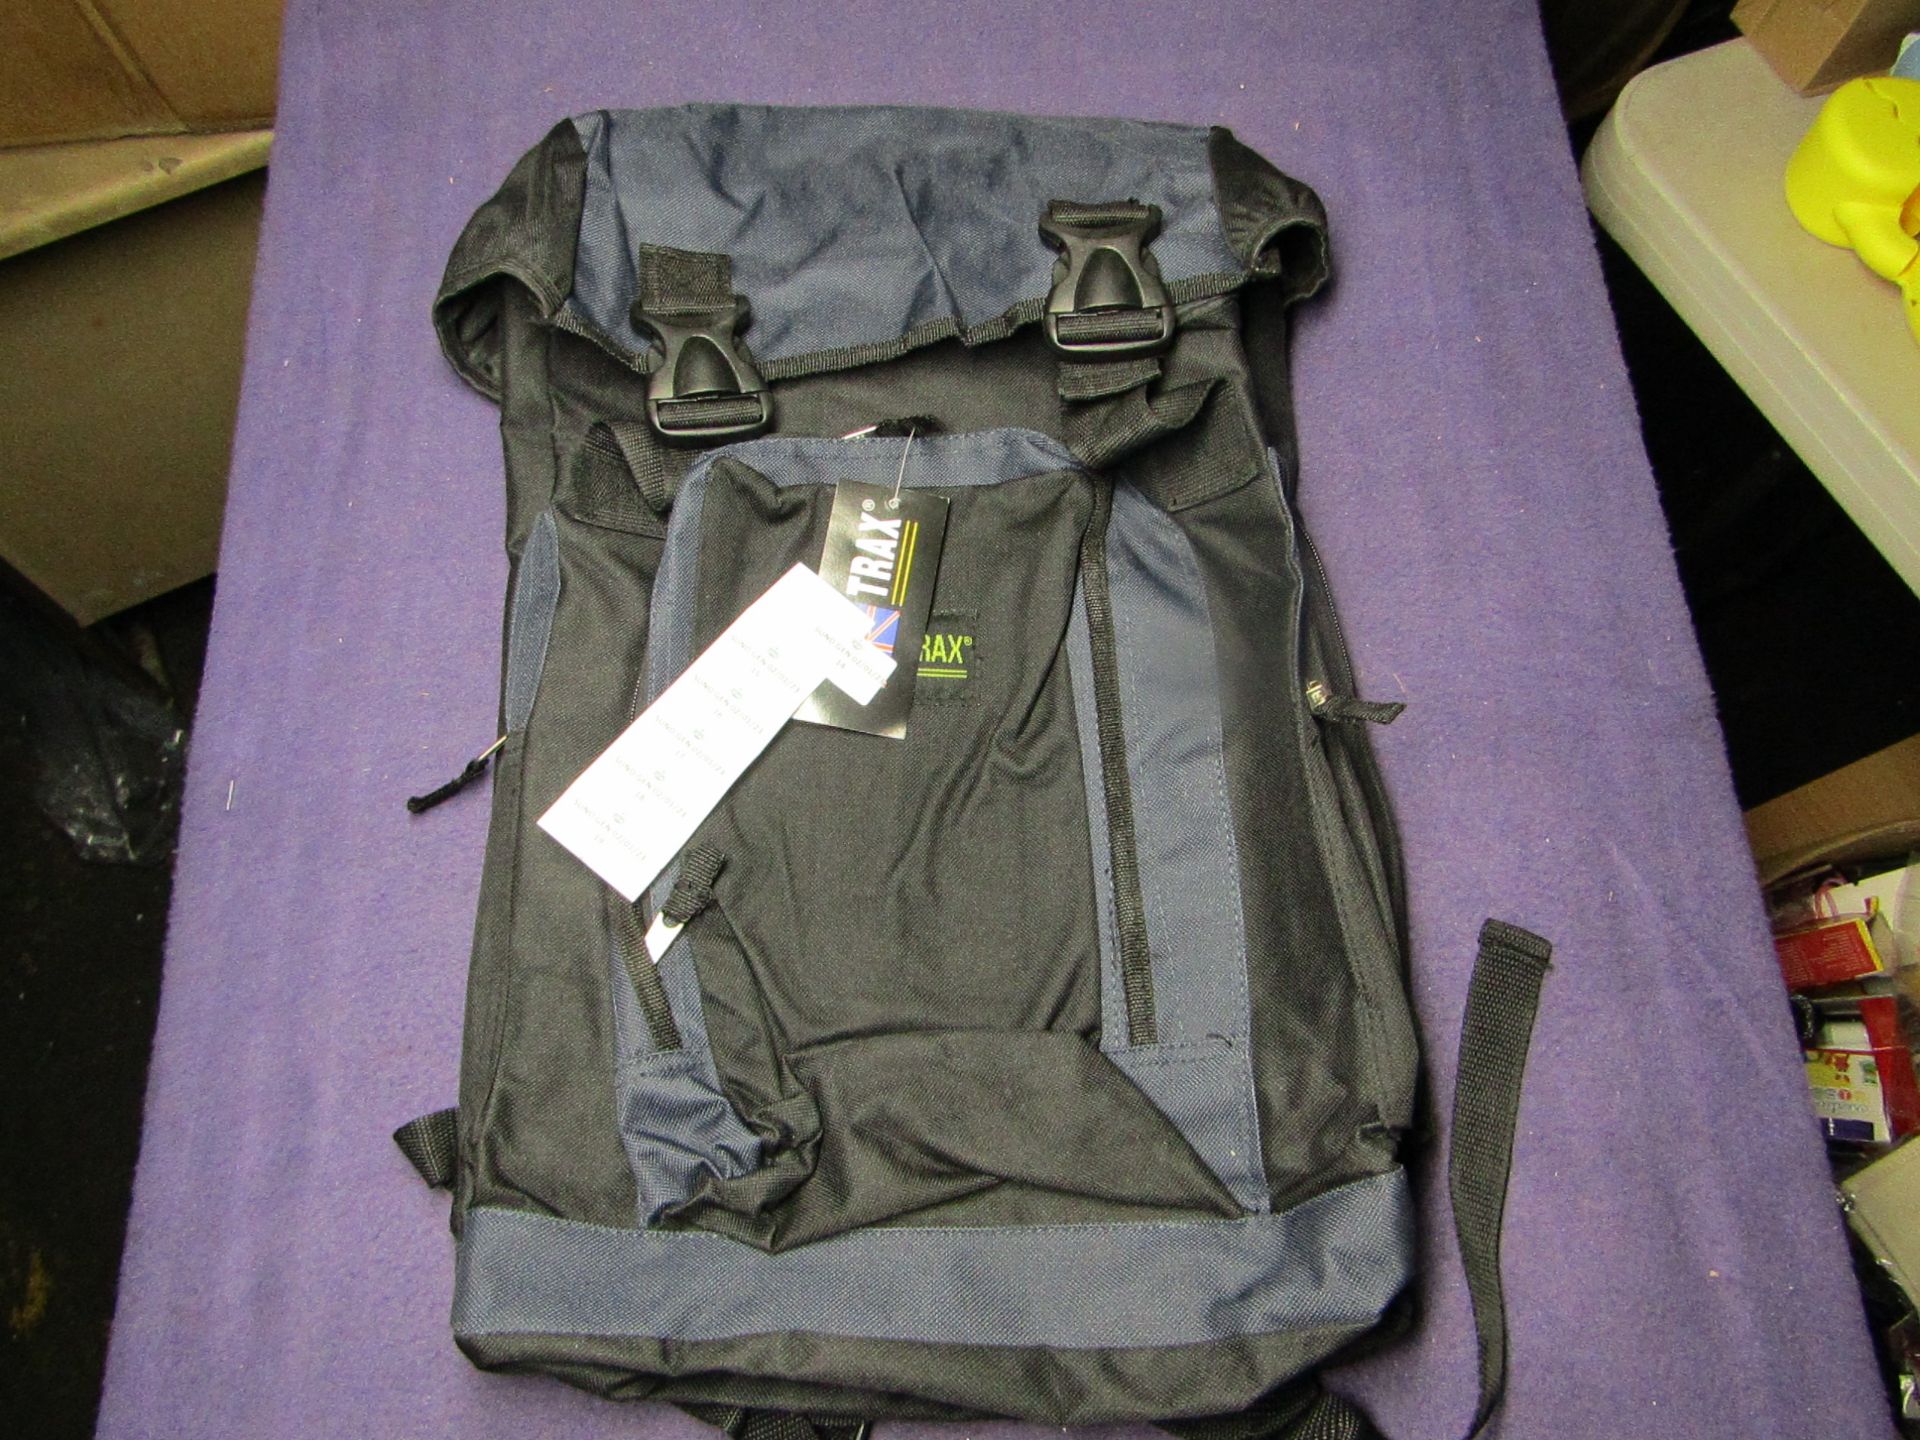 Trax - Black & Navy Backpack - Unused, Original Tags.